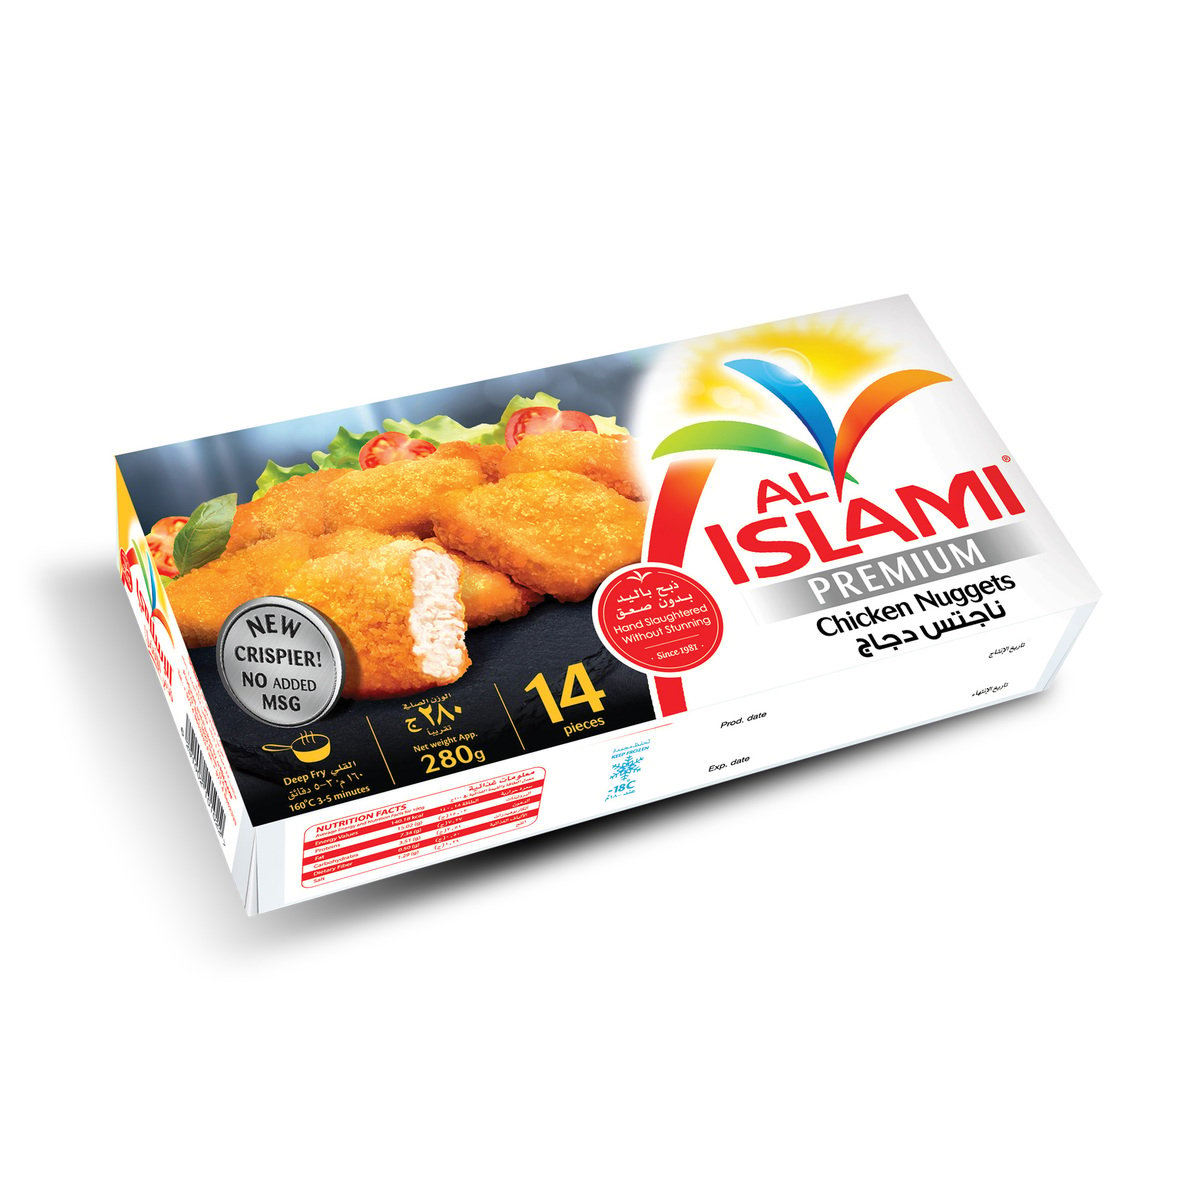 Al Islami Chicken Nuggets 280 g